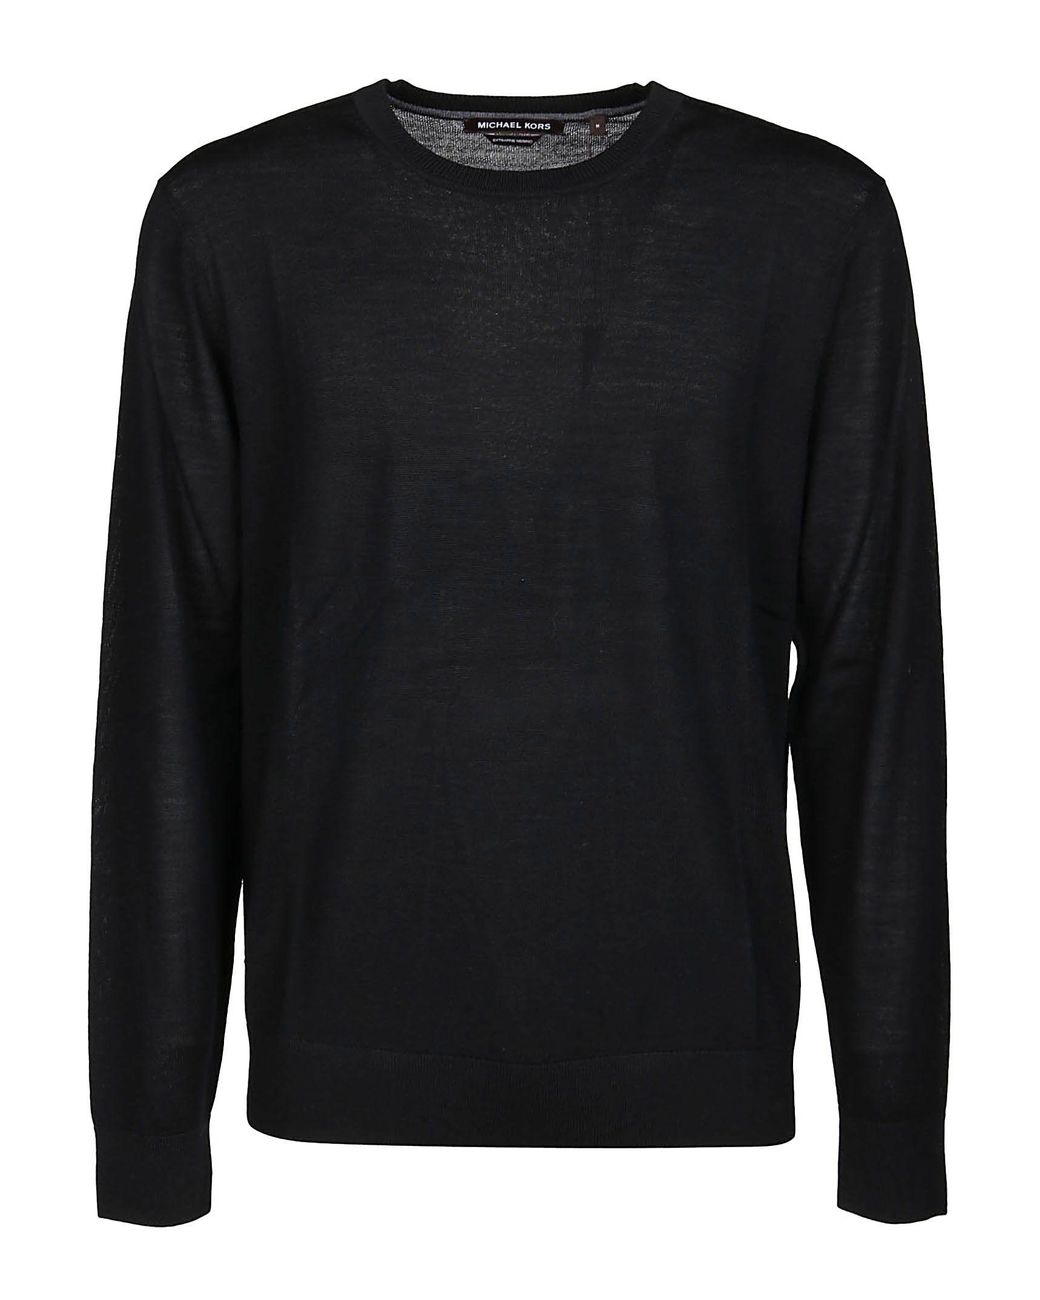 Michael Kors Wool Sweater in Black for Men - Lyst